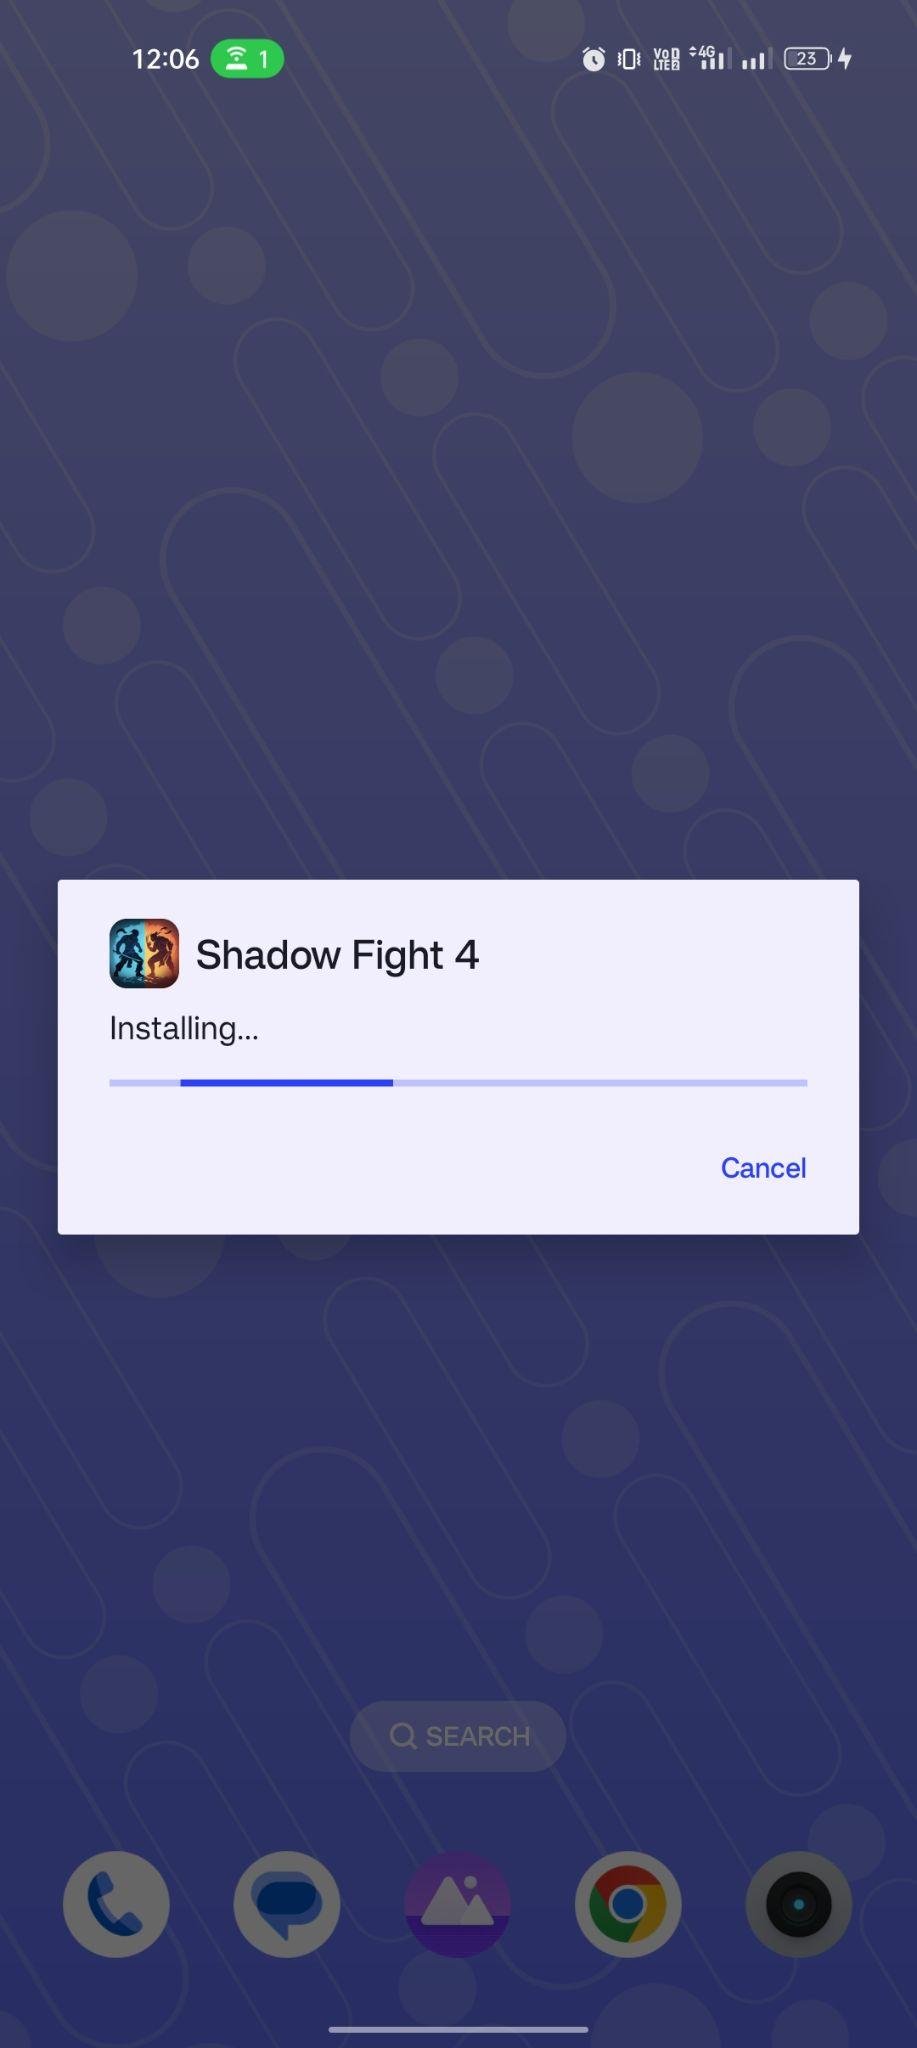 Shadow Fight 4 apk installing